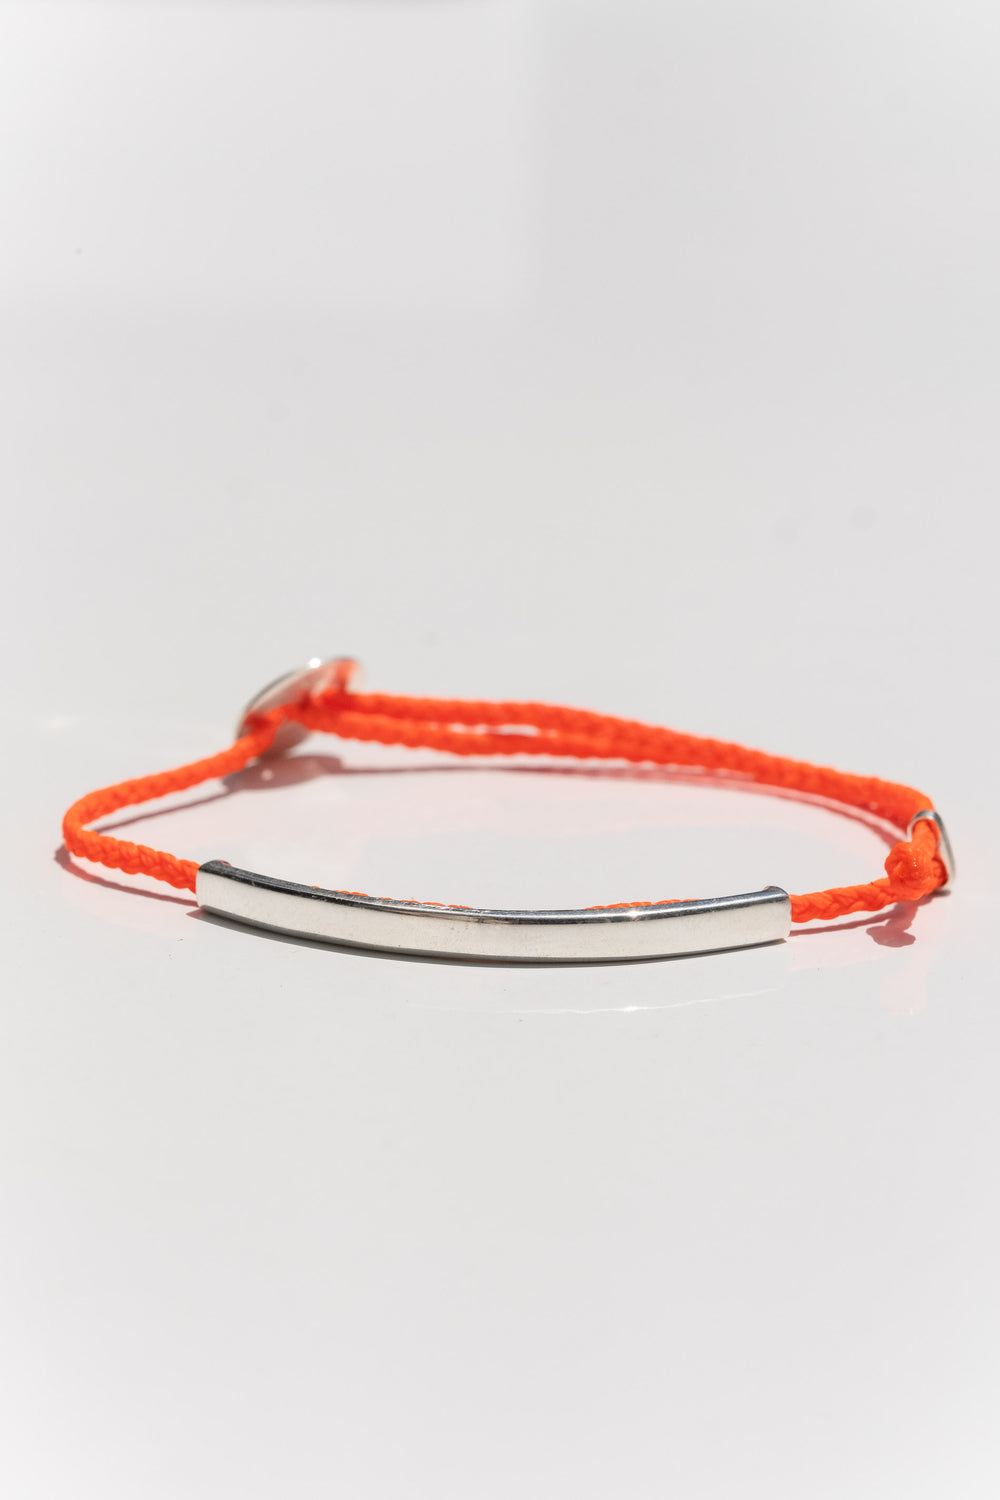 ID Signature Bracelet in Neon Red